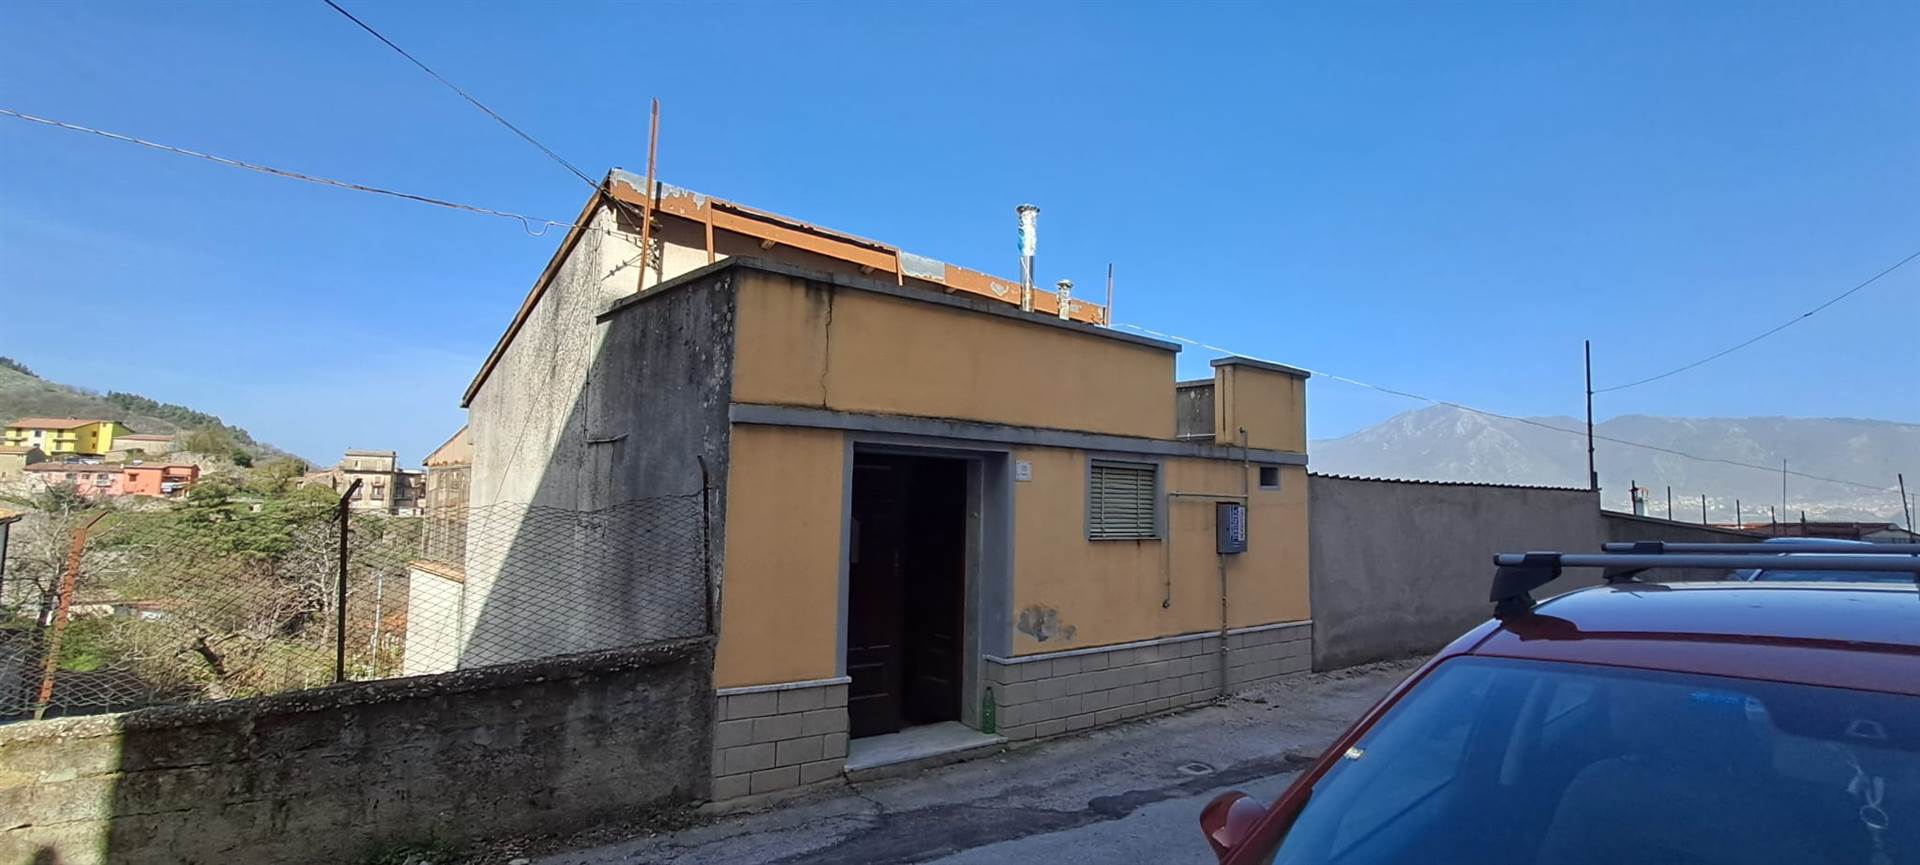 Casa singola in Via Federico ii 28 a Montella